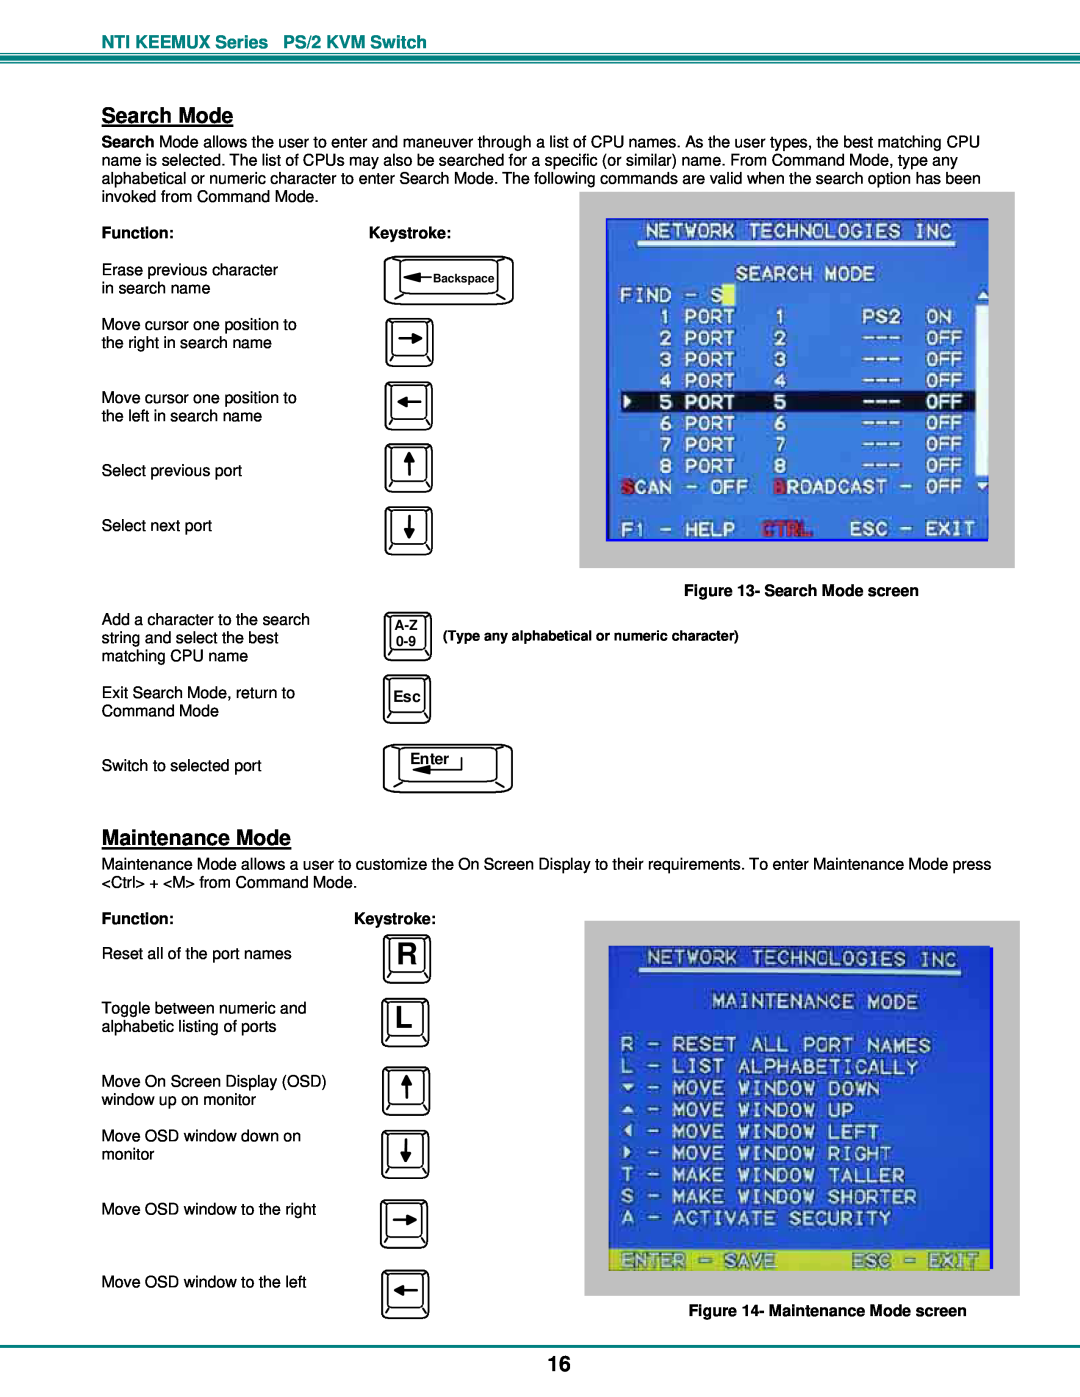 Network Technologies PS/2 KVM operation manual Maintenance Mode, Function Keystroke, Search Mode screen, Esc Enter 